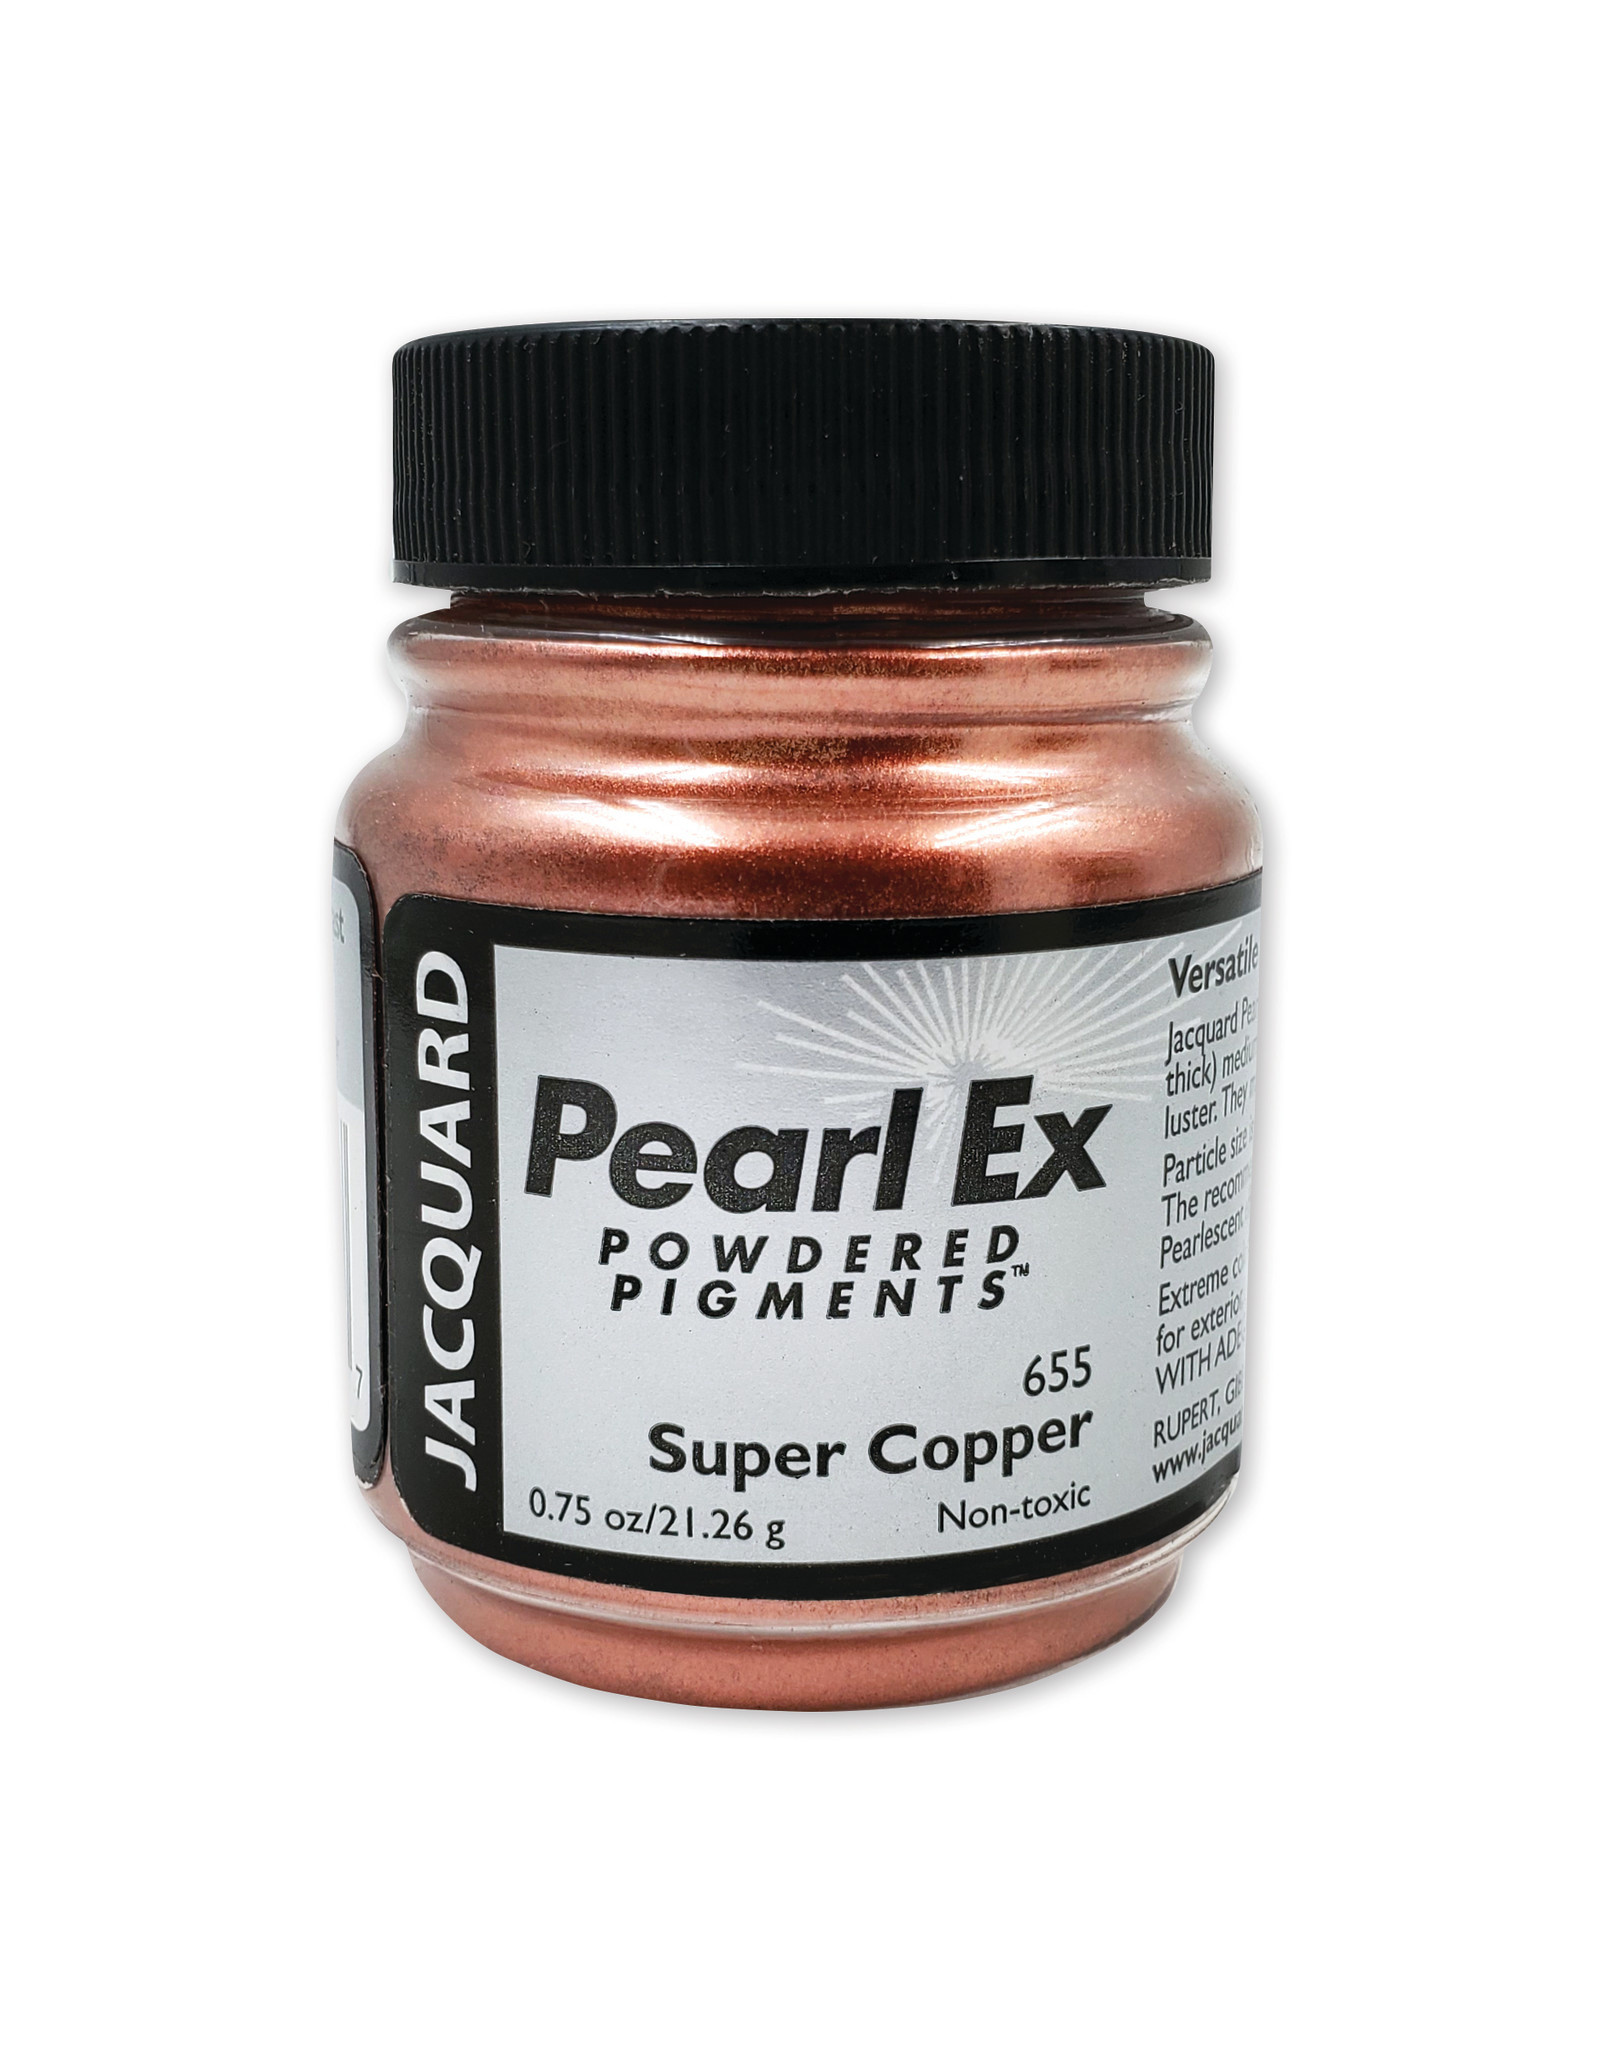 Jacquard Jacquard Pearl Ex, Super Copper #655 3/4oz